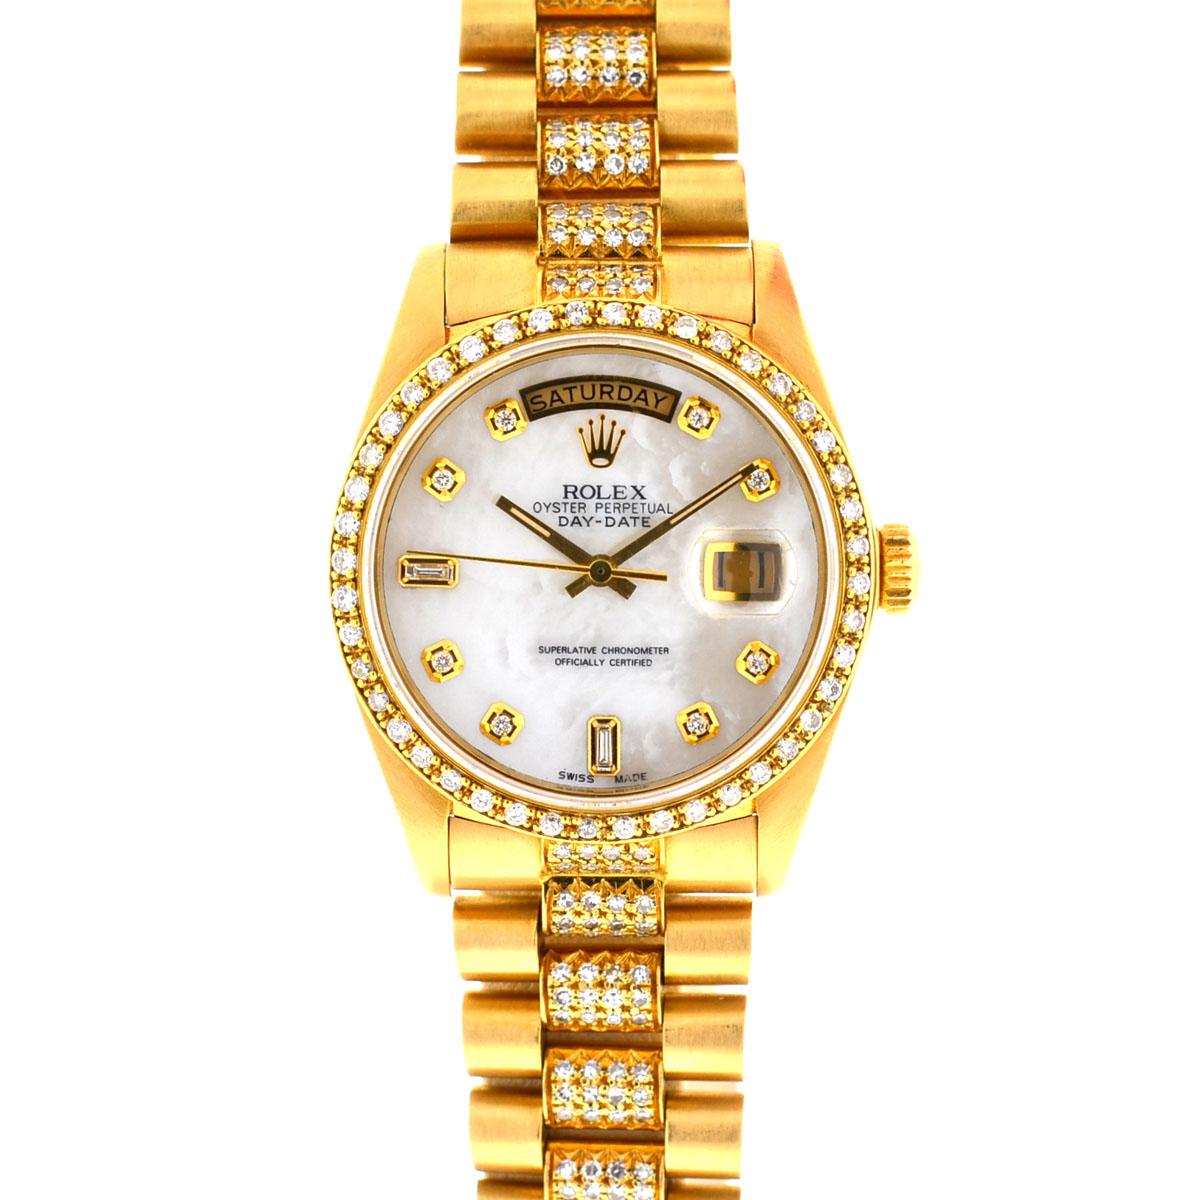 Company - Rolex
Model - 18038 Day-Date Single Quick President
Case Metal - 18k Yellow Gold
Case Measurement - 36mm
Bracelet - Custom 18k Yellow Gold & Diamonds- Fits Wrist Size - 7.5